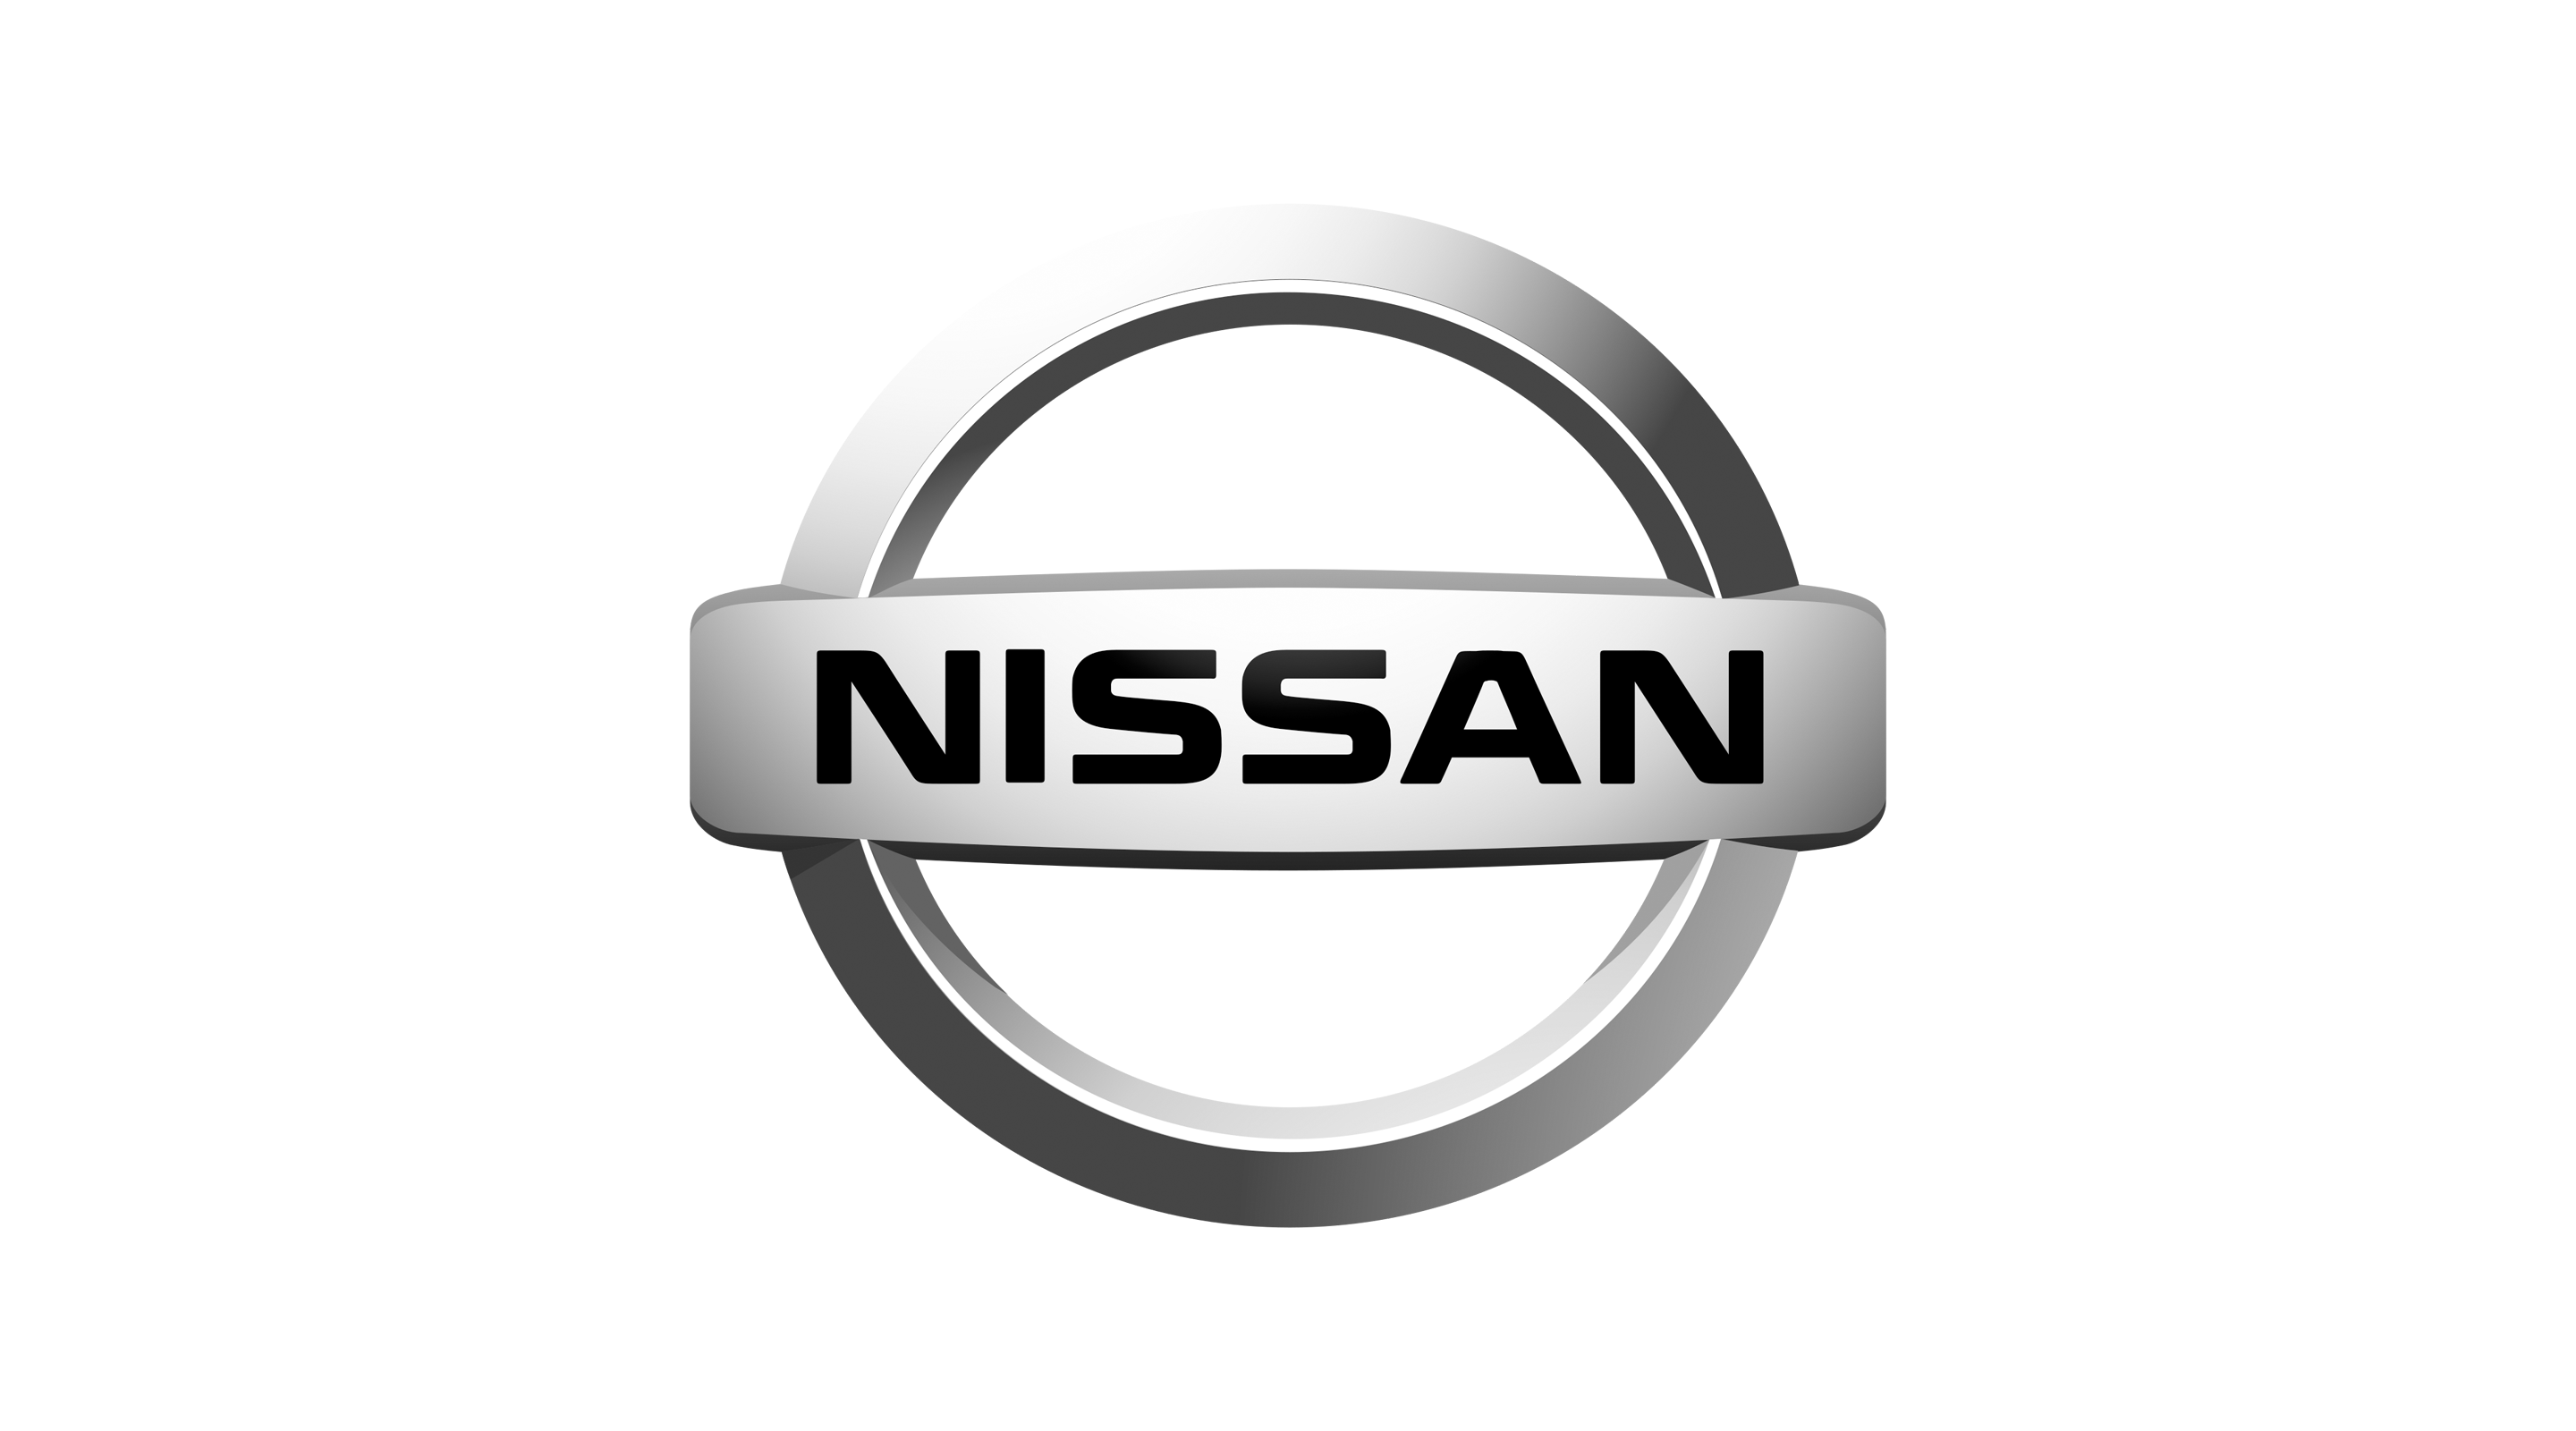 Hãng xe Nissan